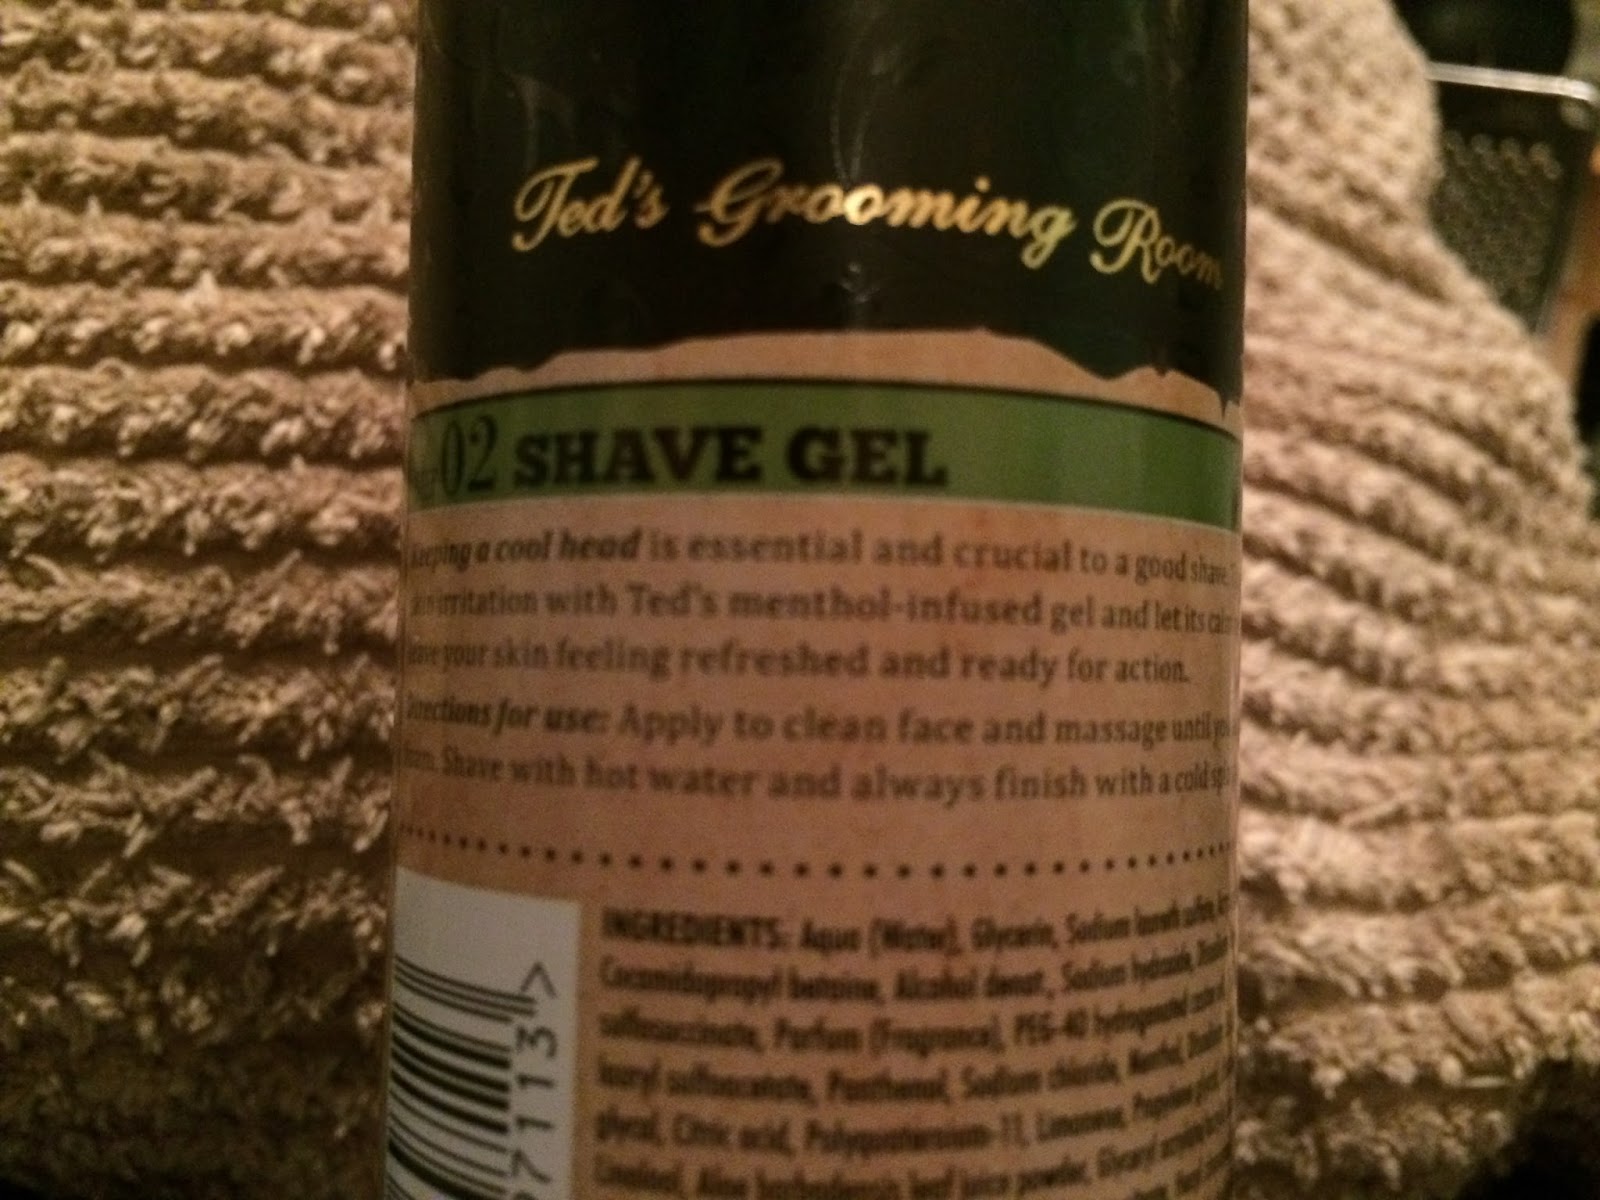 Ted's Grooming Room - Step 02 Shave Gel